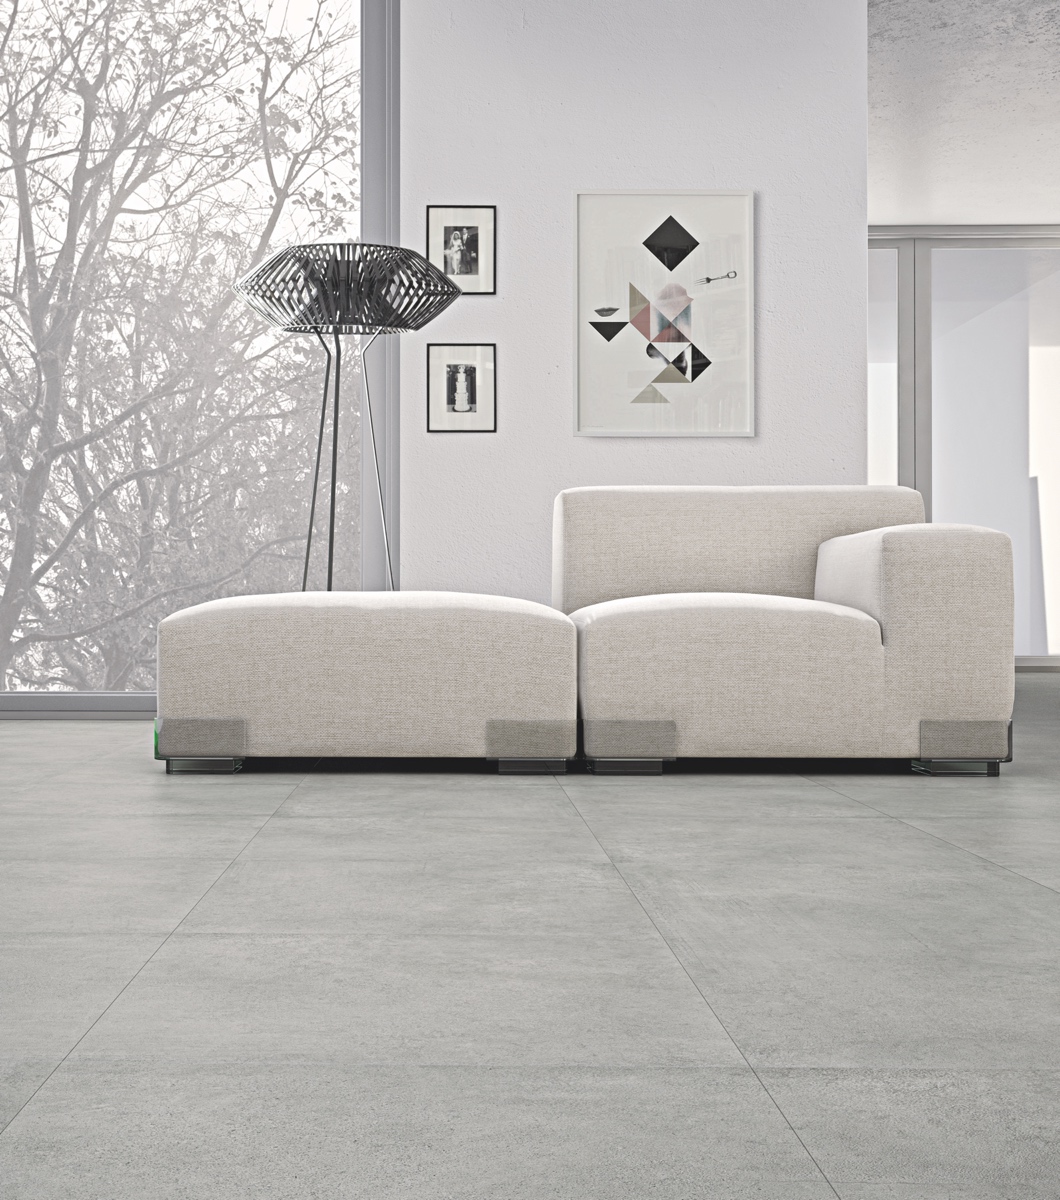 Cemento - living room